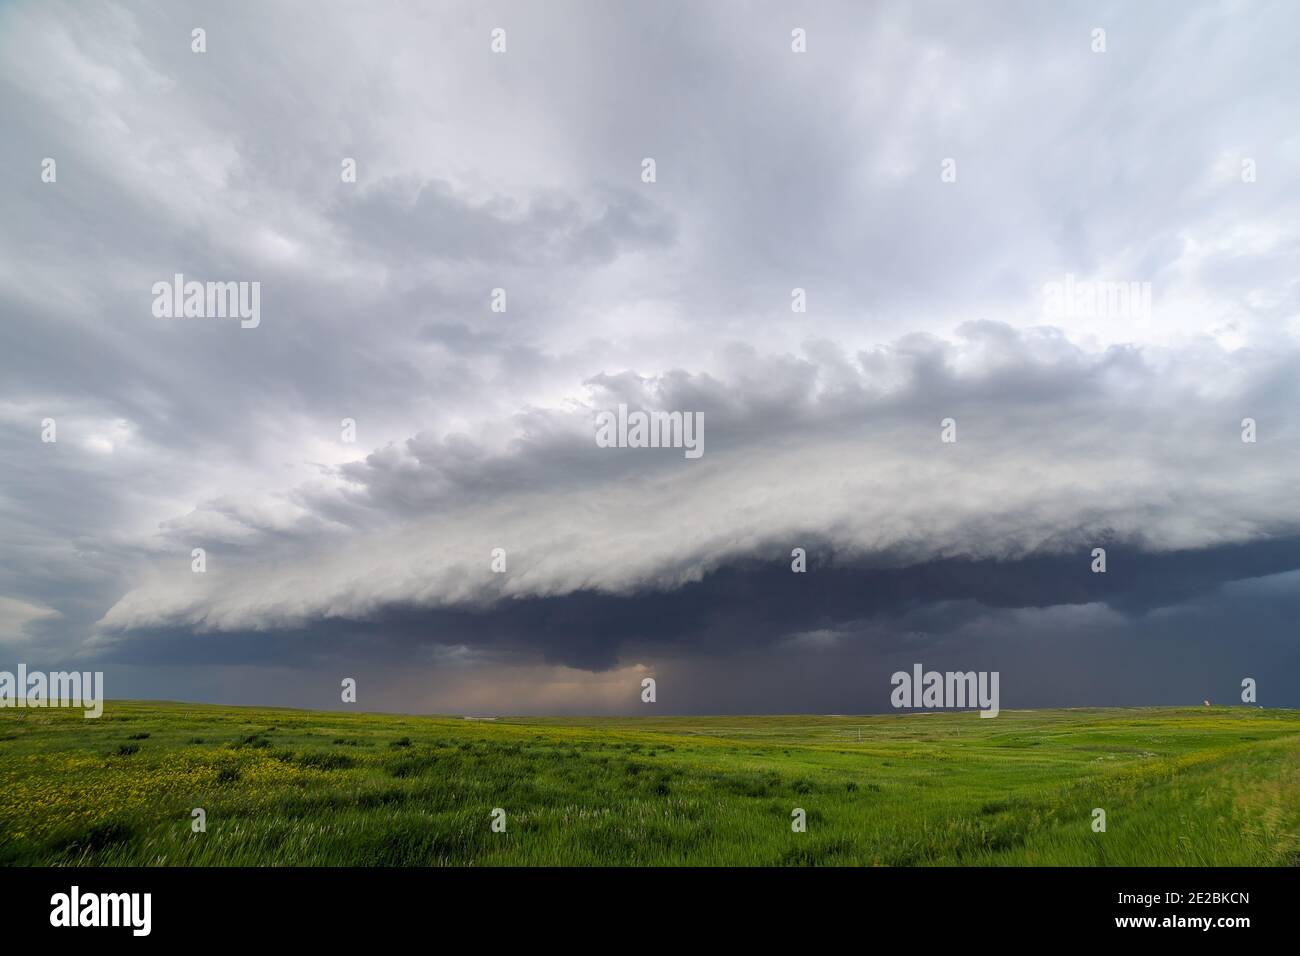 Shelf cloud and derecho storm system in South Dakota Stock Photo